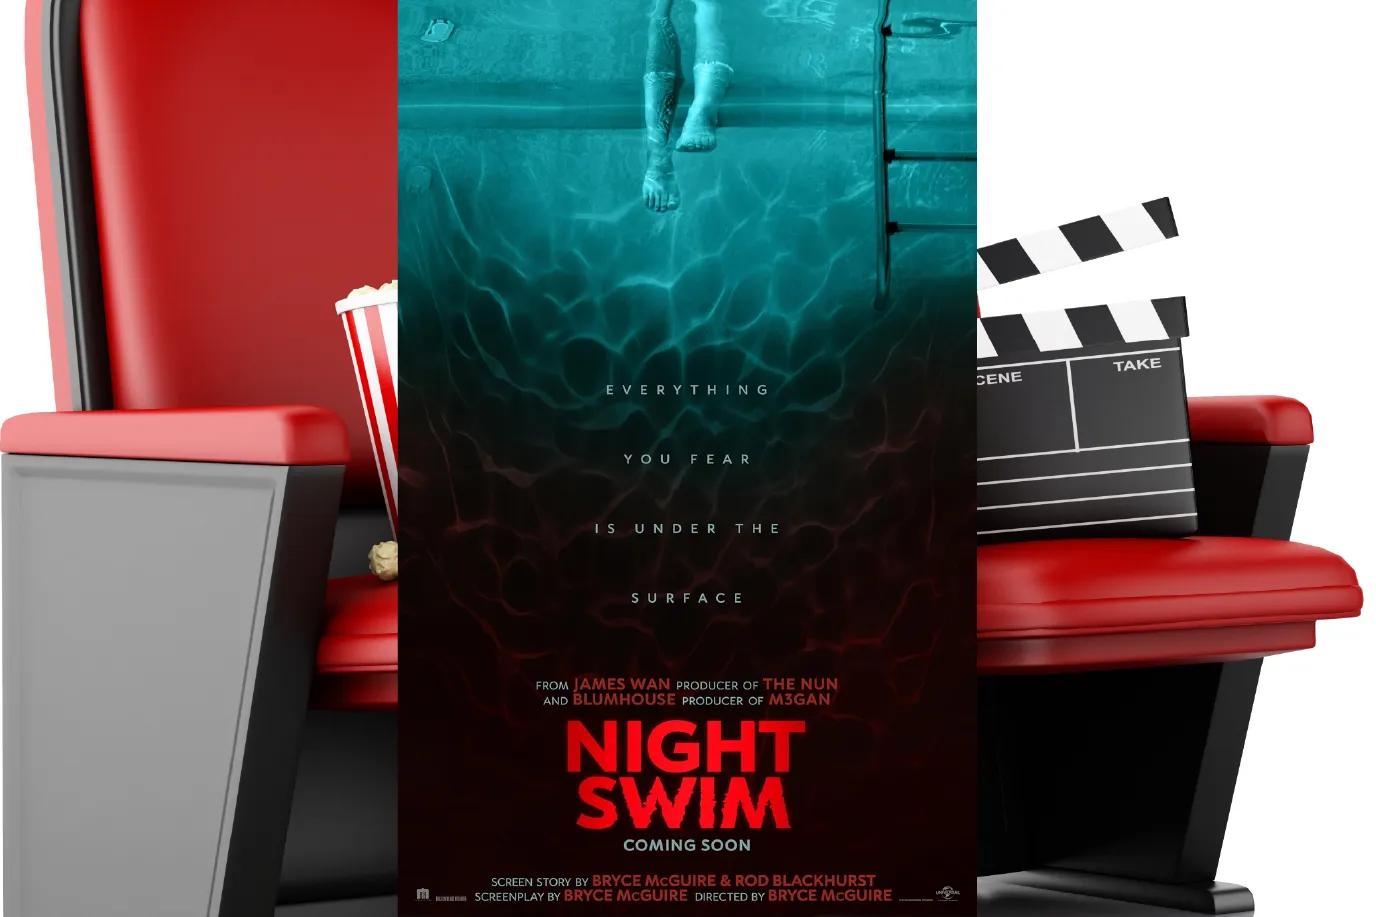 Movie poster for "Night Swim"